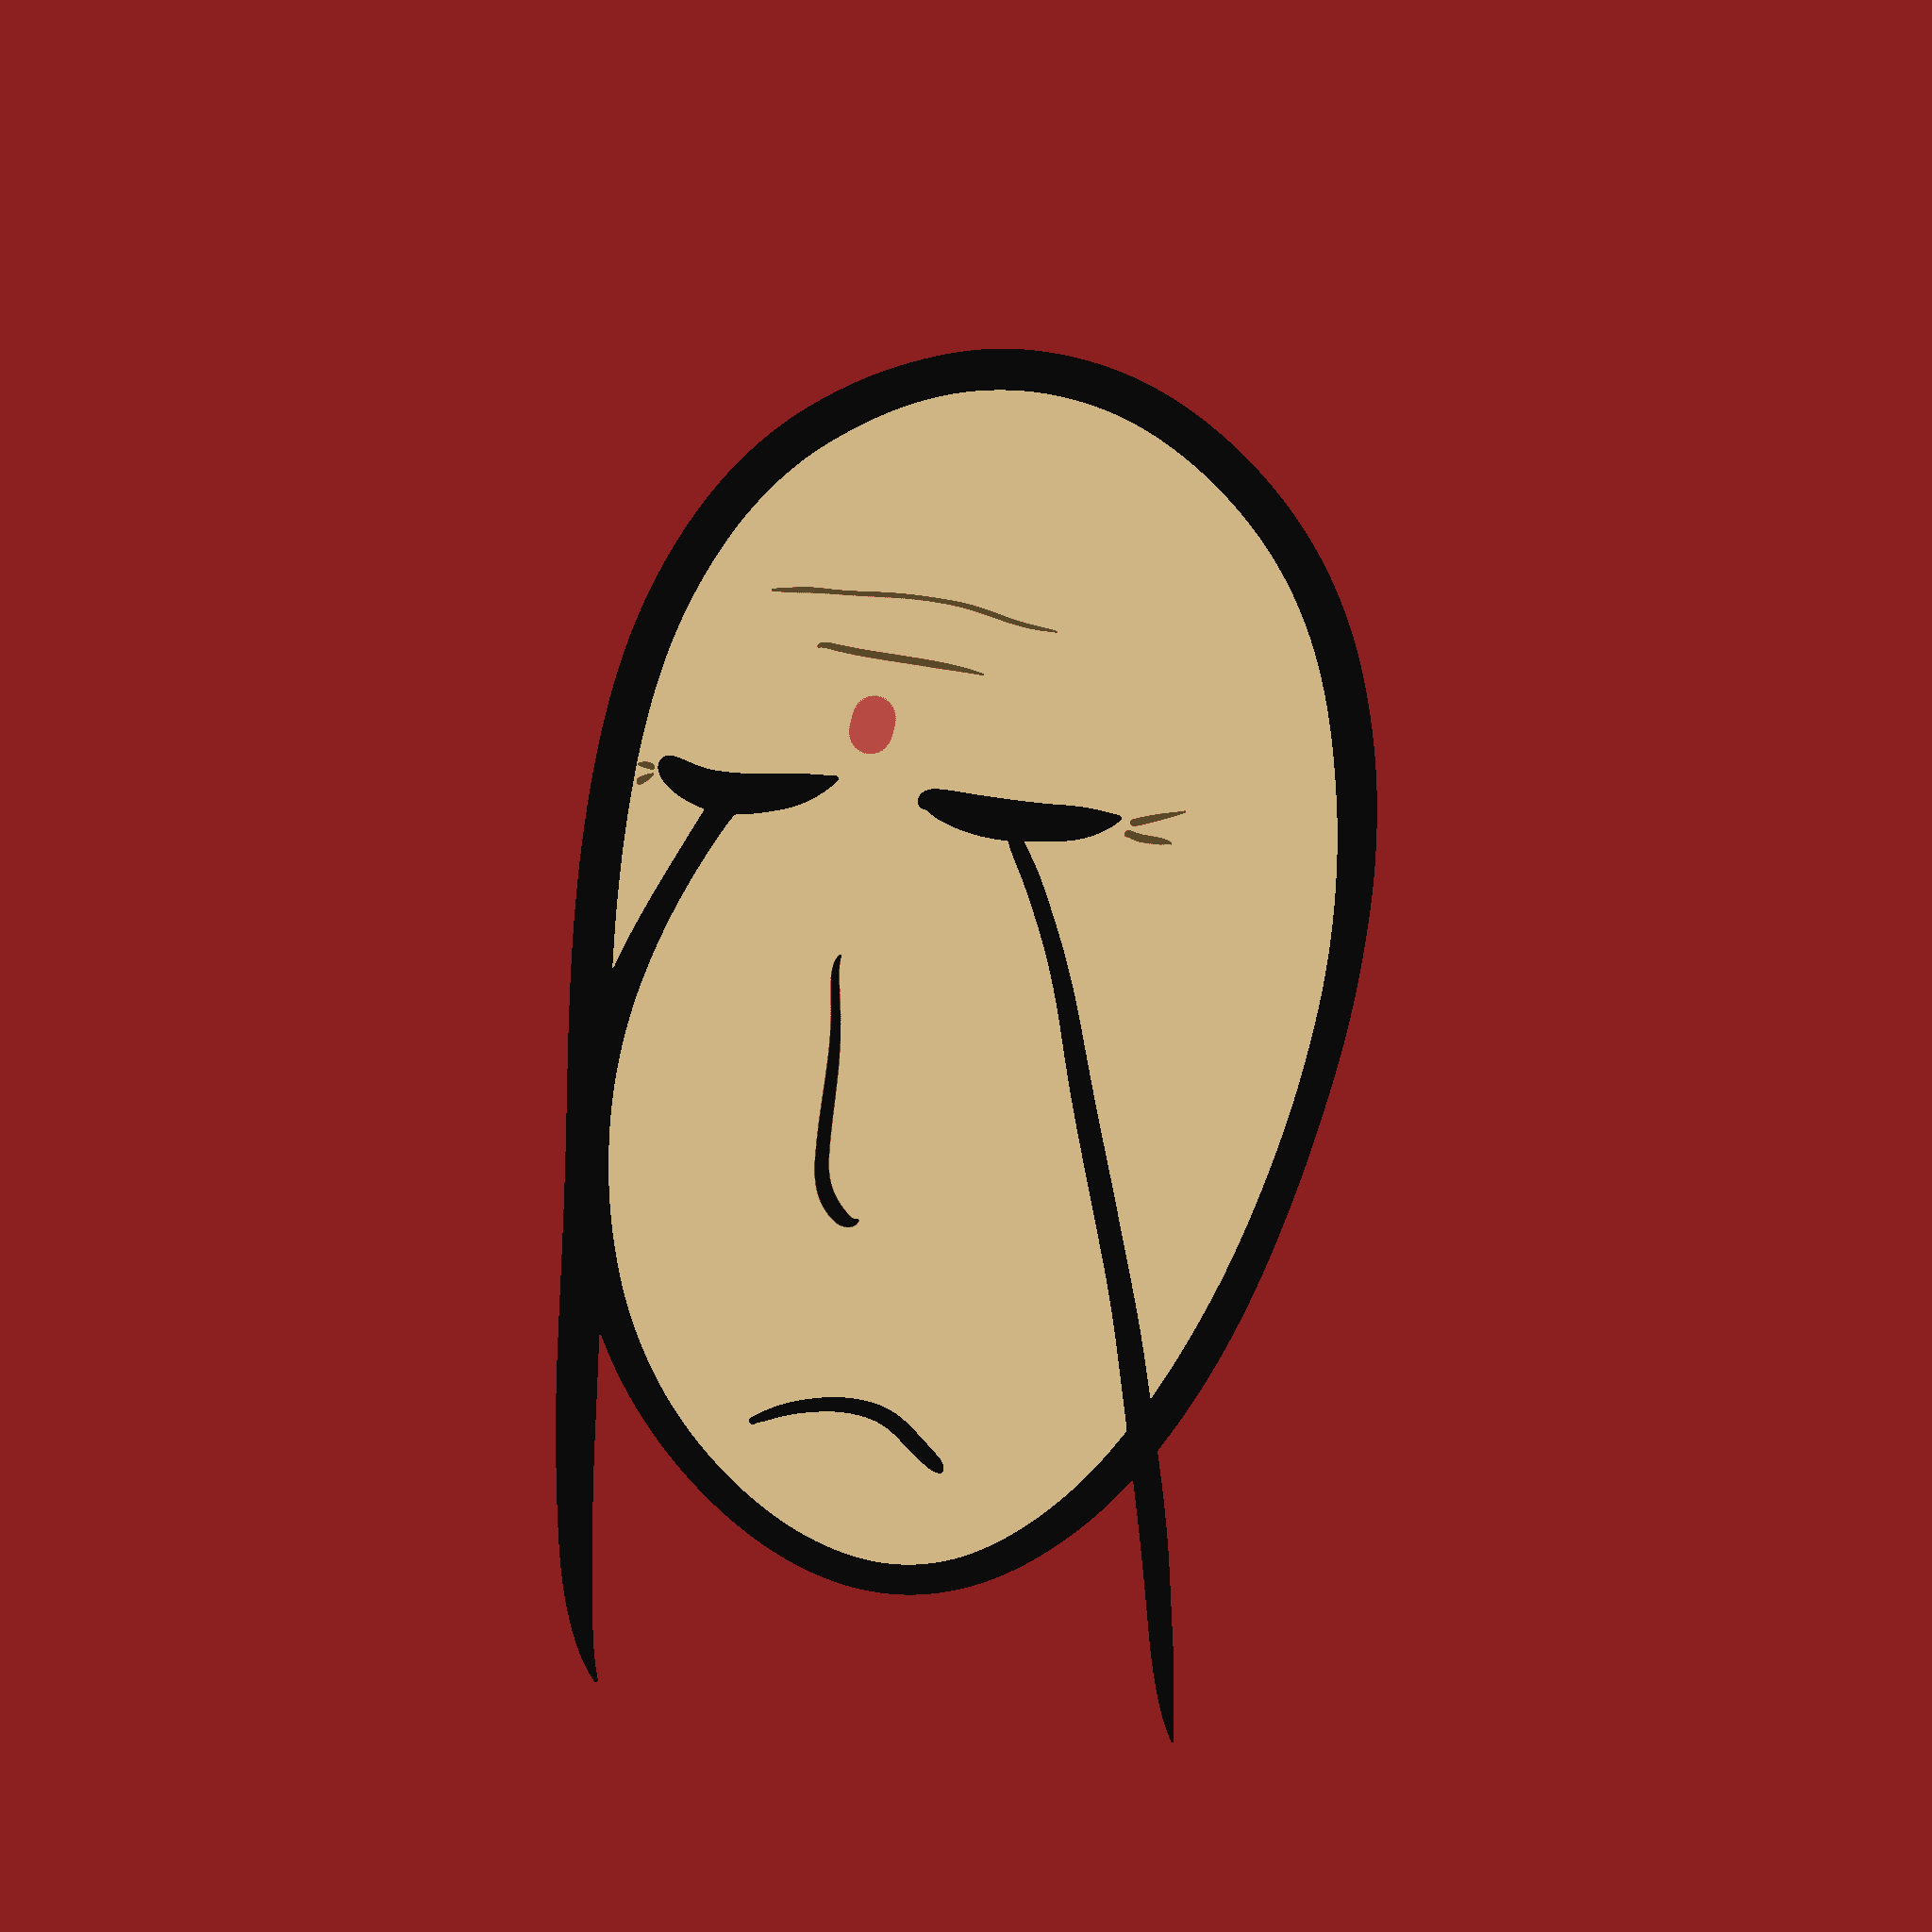 Misery Man #62